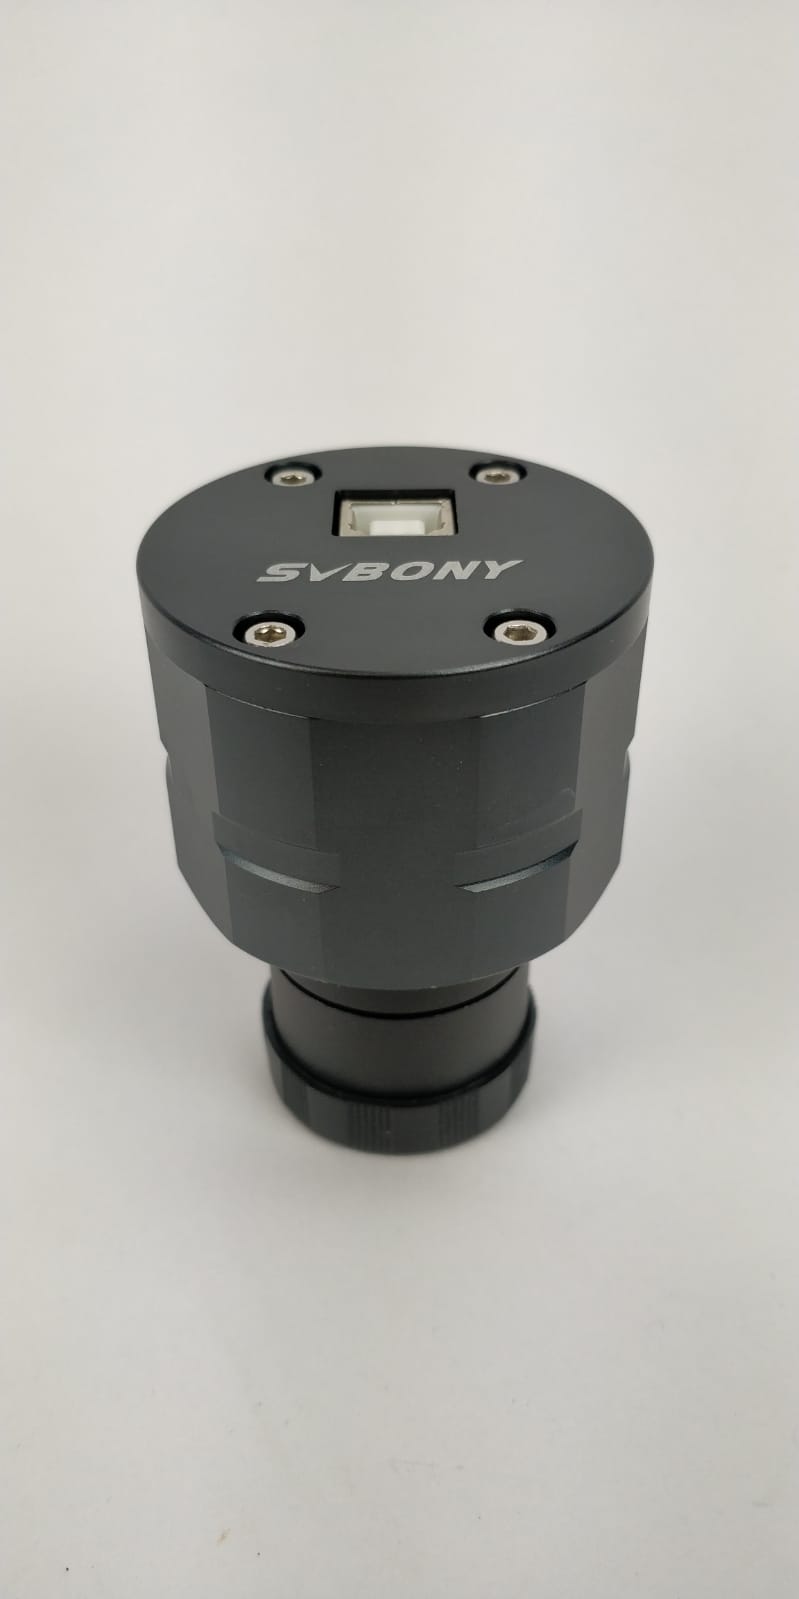  SV305 Astronomy Camera for Planetary Photography Usato ottime condizioni[EN] 